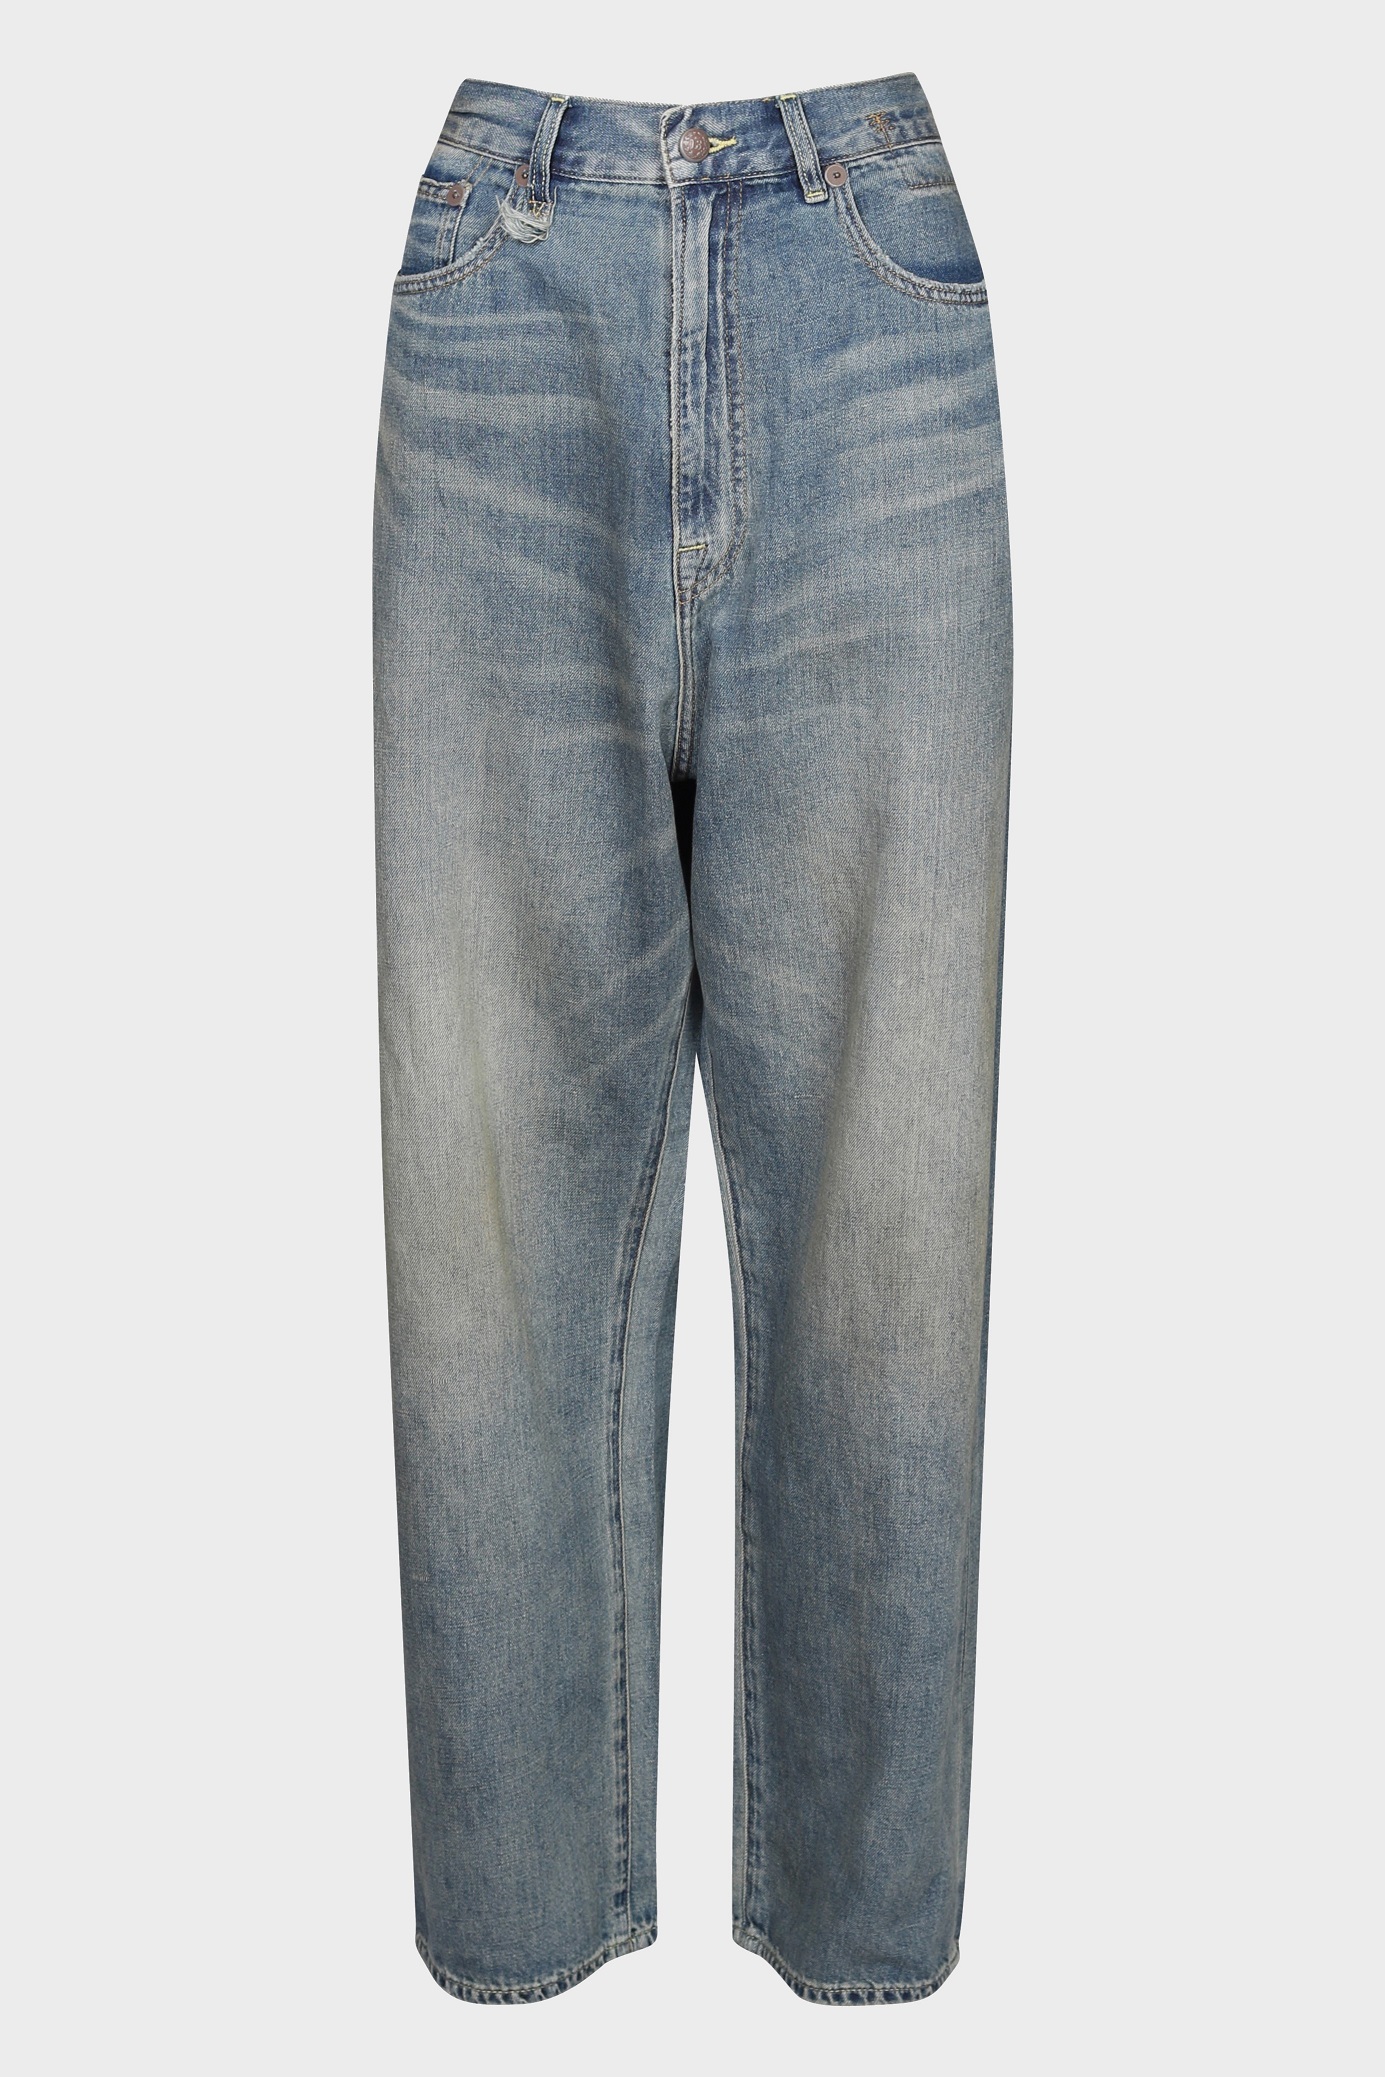 R13 Boyfriend Venti Jeans in Weber Linen Indigo